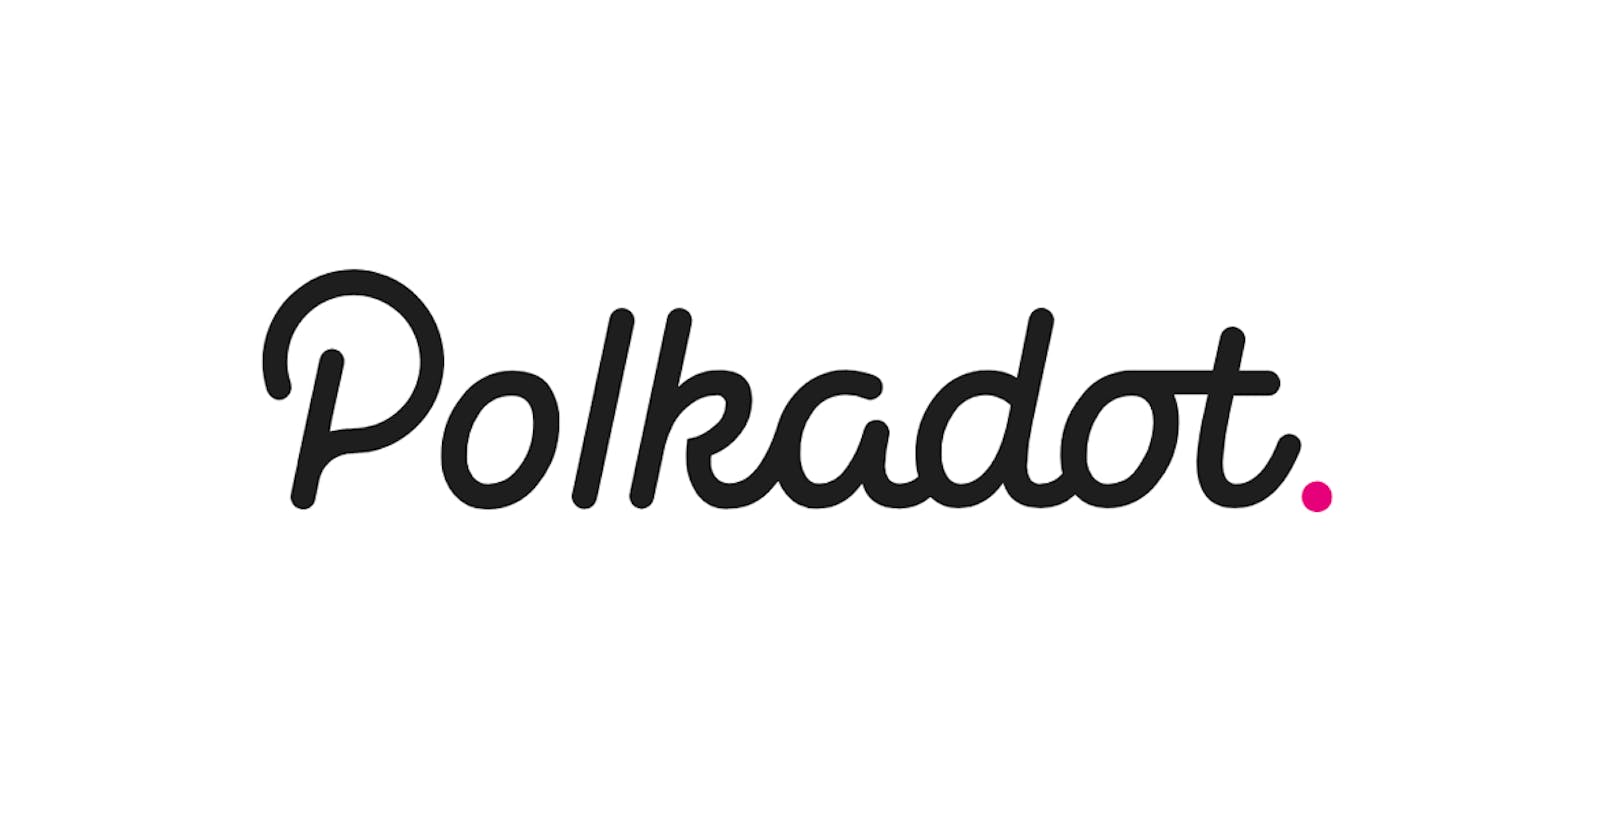 Polkadot !! The Internet for blockchains 🌐